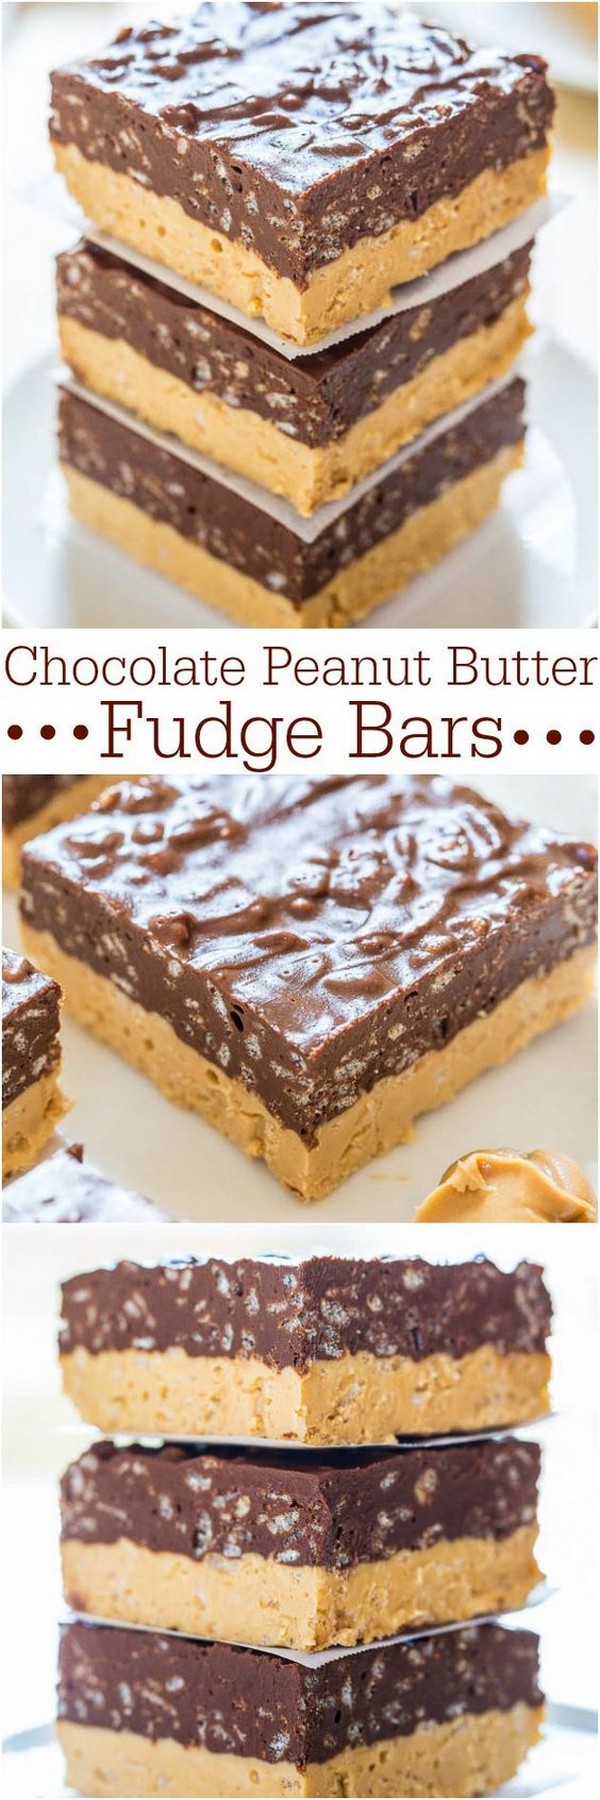 Chocolate Peanut Butter Fudge Bars